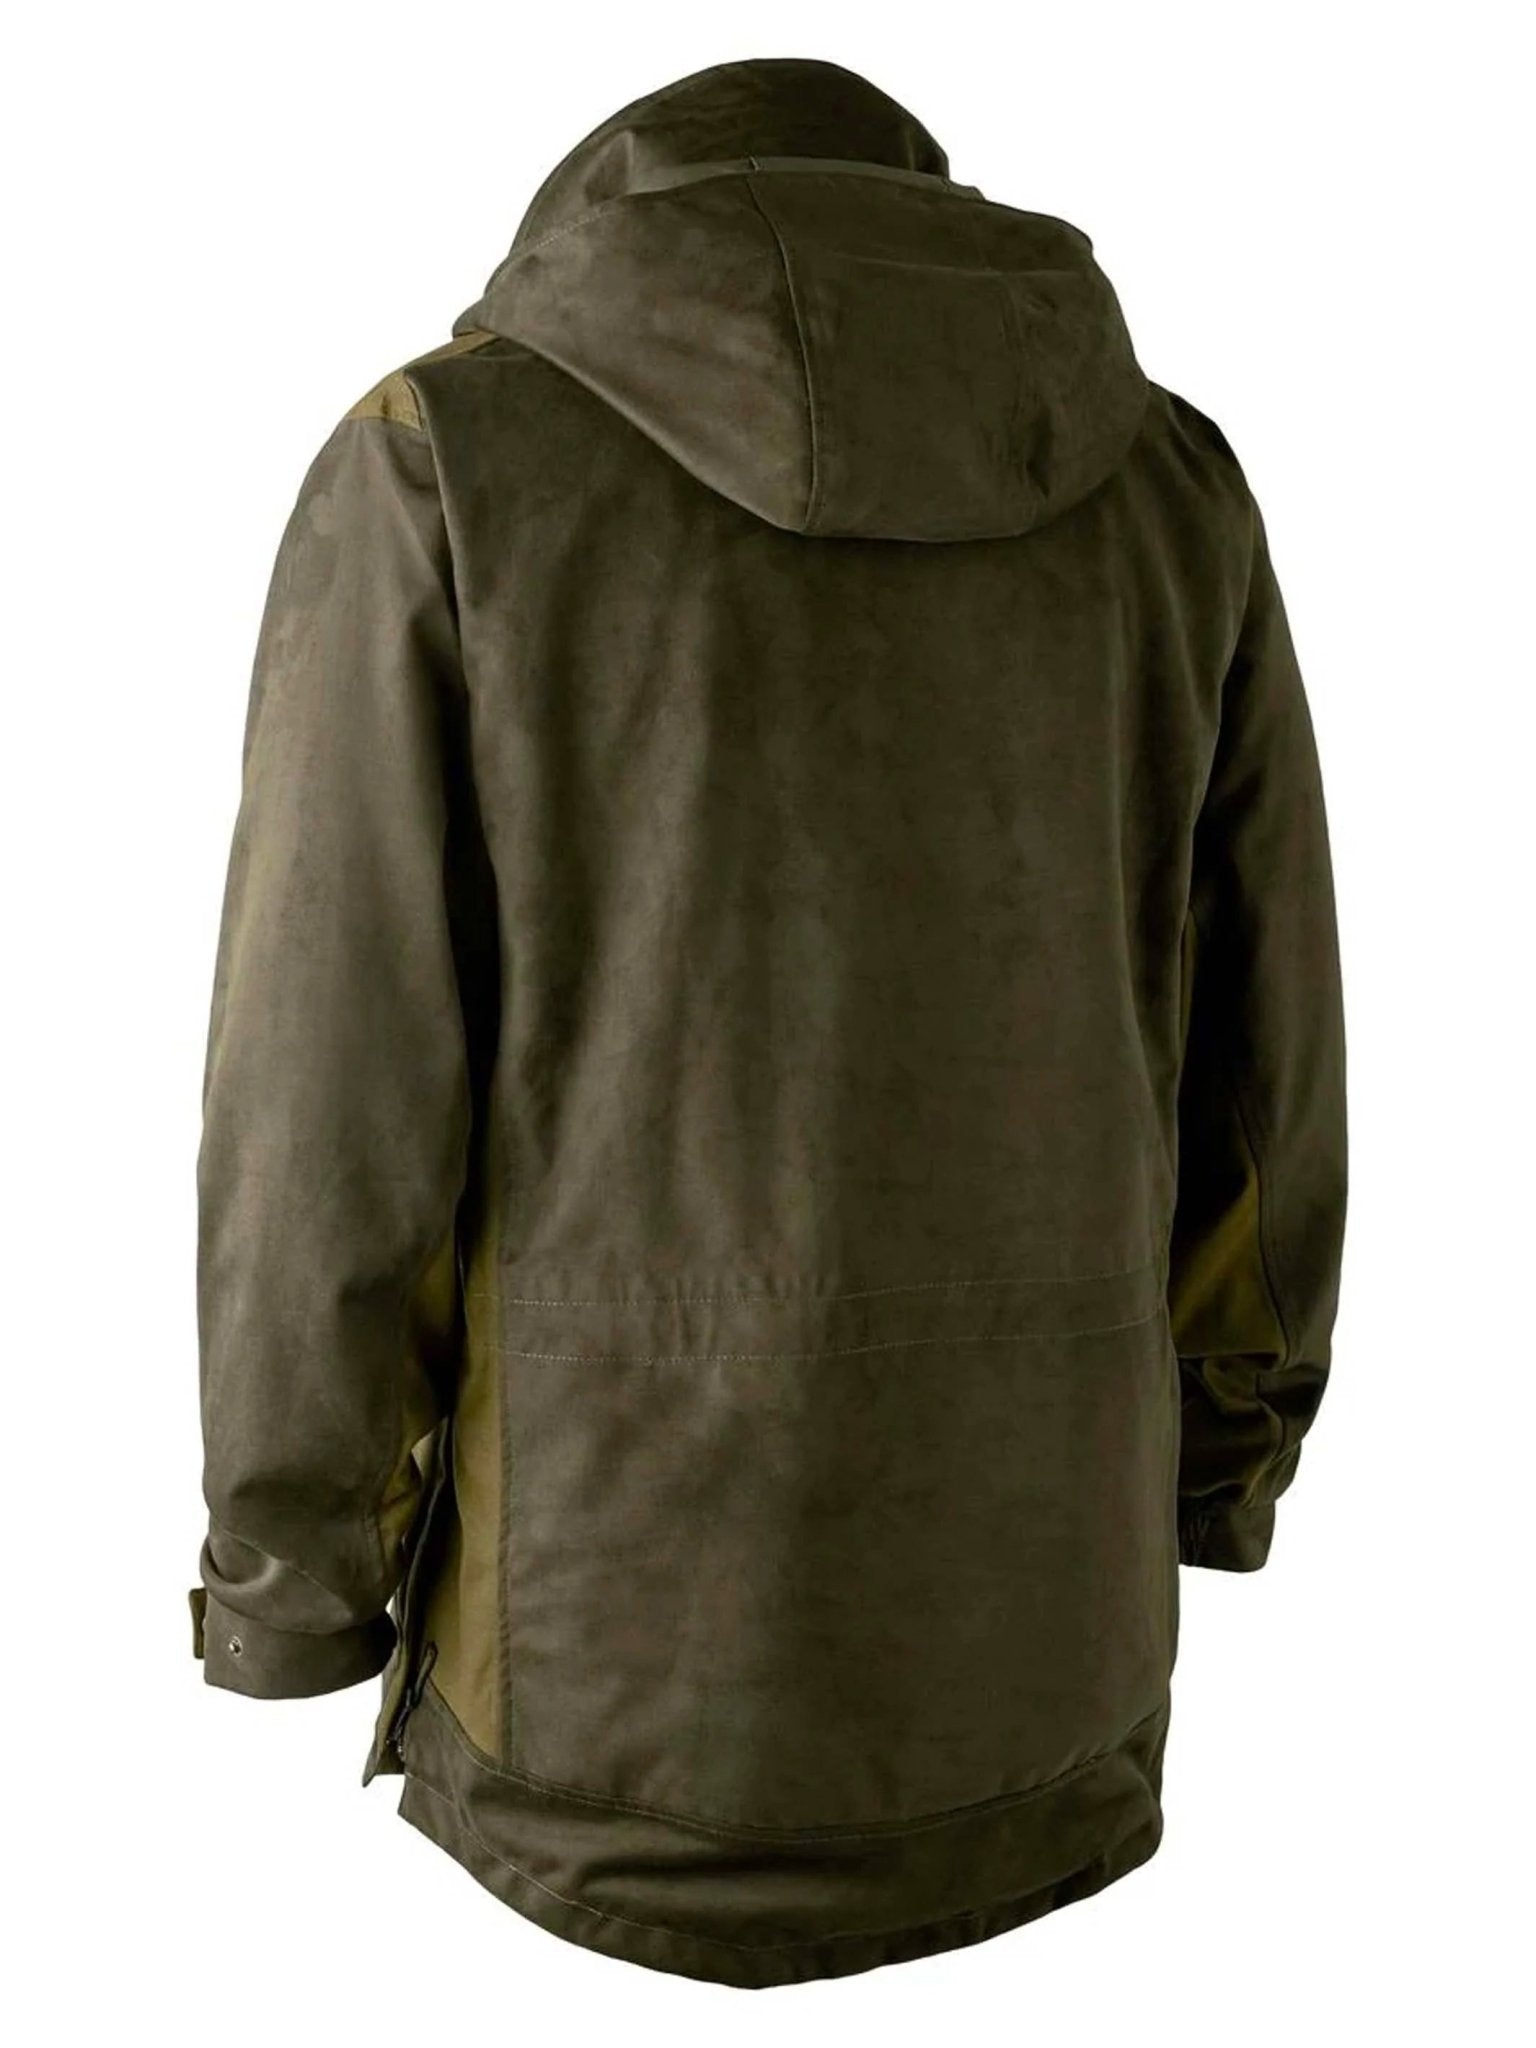 Keela Talus Jacket Mens. Insulated Warm Outdoors Coat.